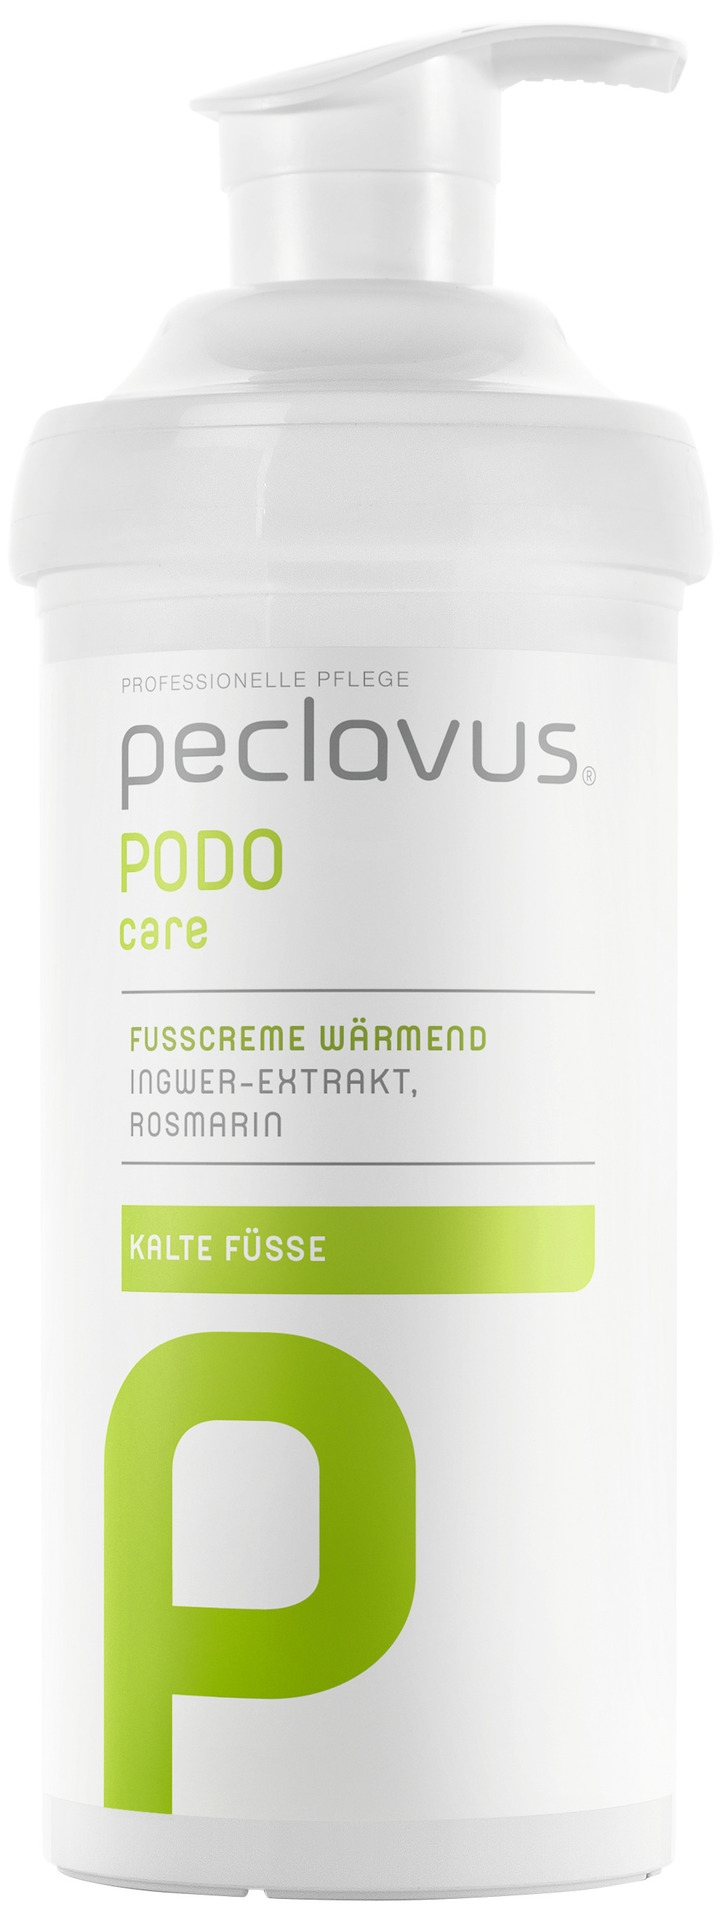 Peclavus PODOcare Fußcreme wärmend | 500 ml